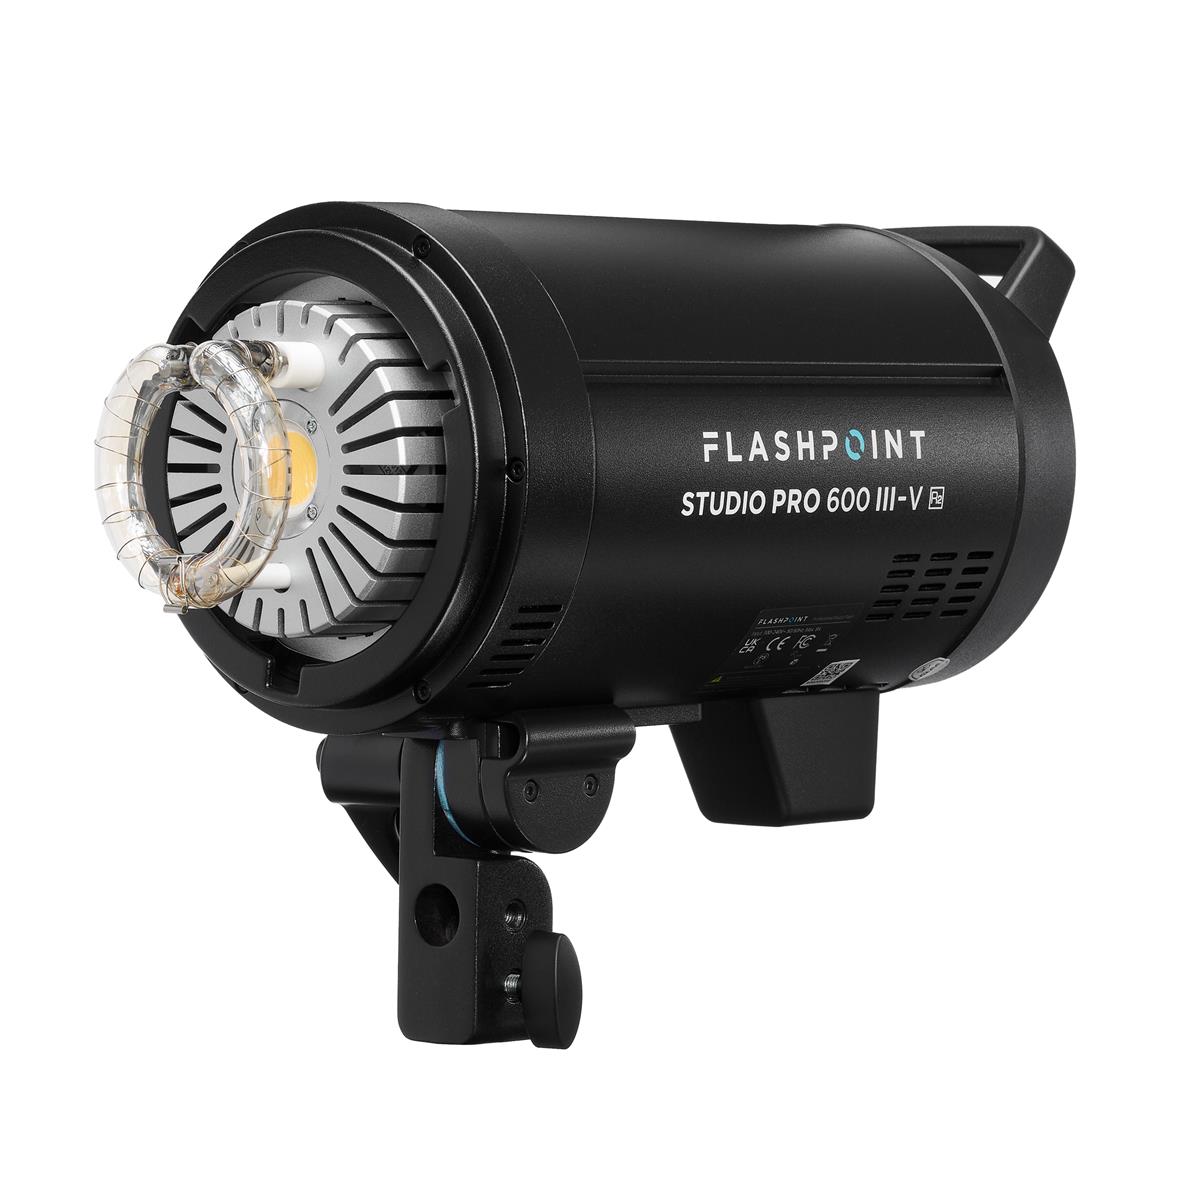 Image of Flashpoint Studio Pro 600 III-V 600Ws R2 Monolight Flash With LED Modeling Lamp